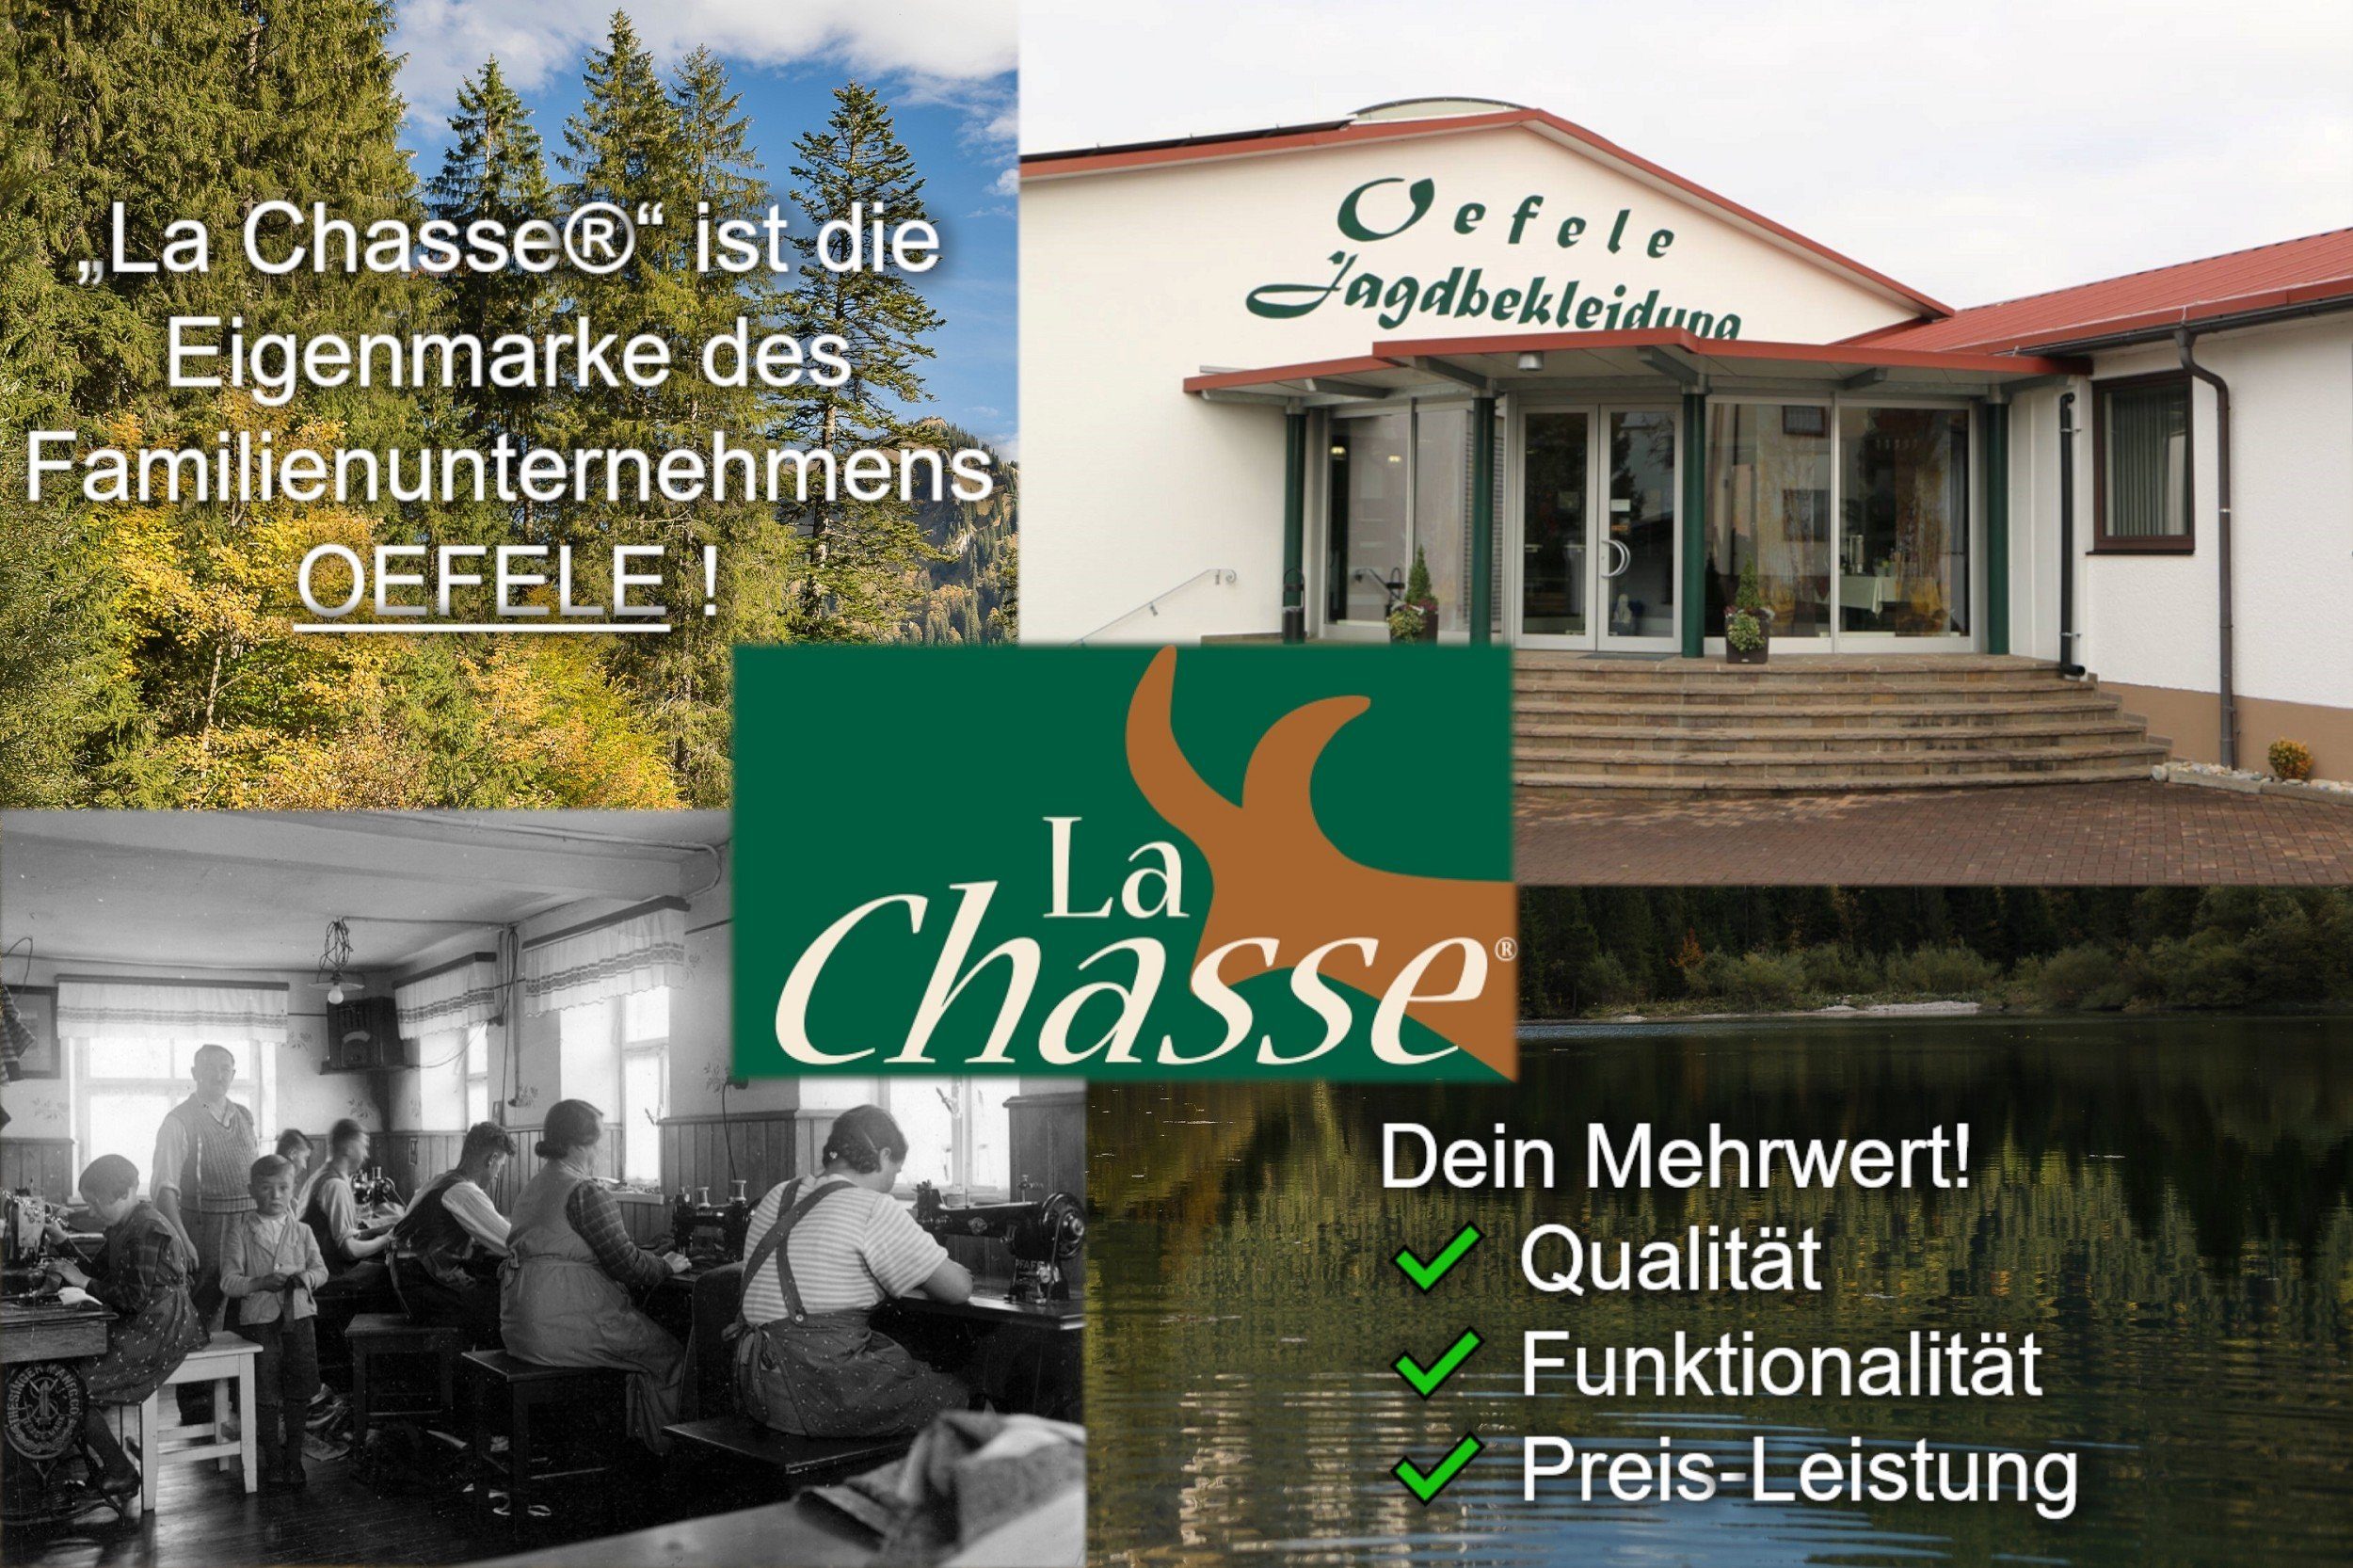 Chasse® Filzhut La Schinderhannes-Trachtenhut oliv Stopselhut & Jagdhut braun Försterhut